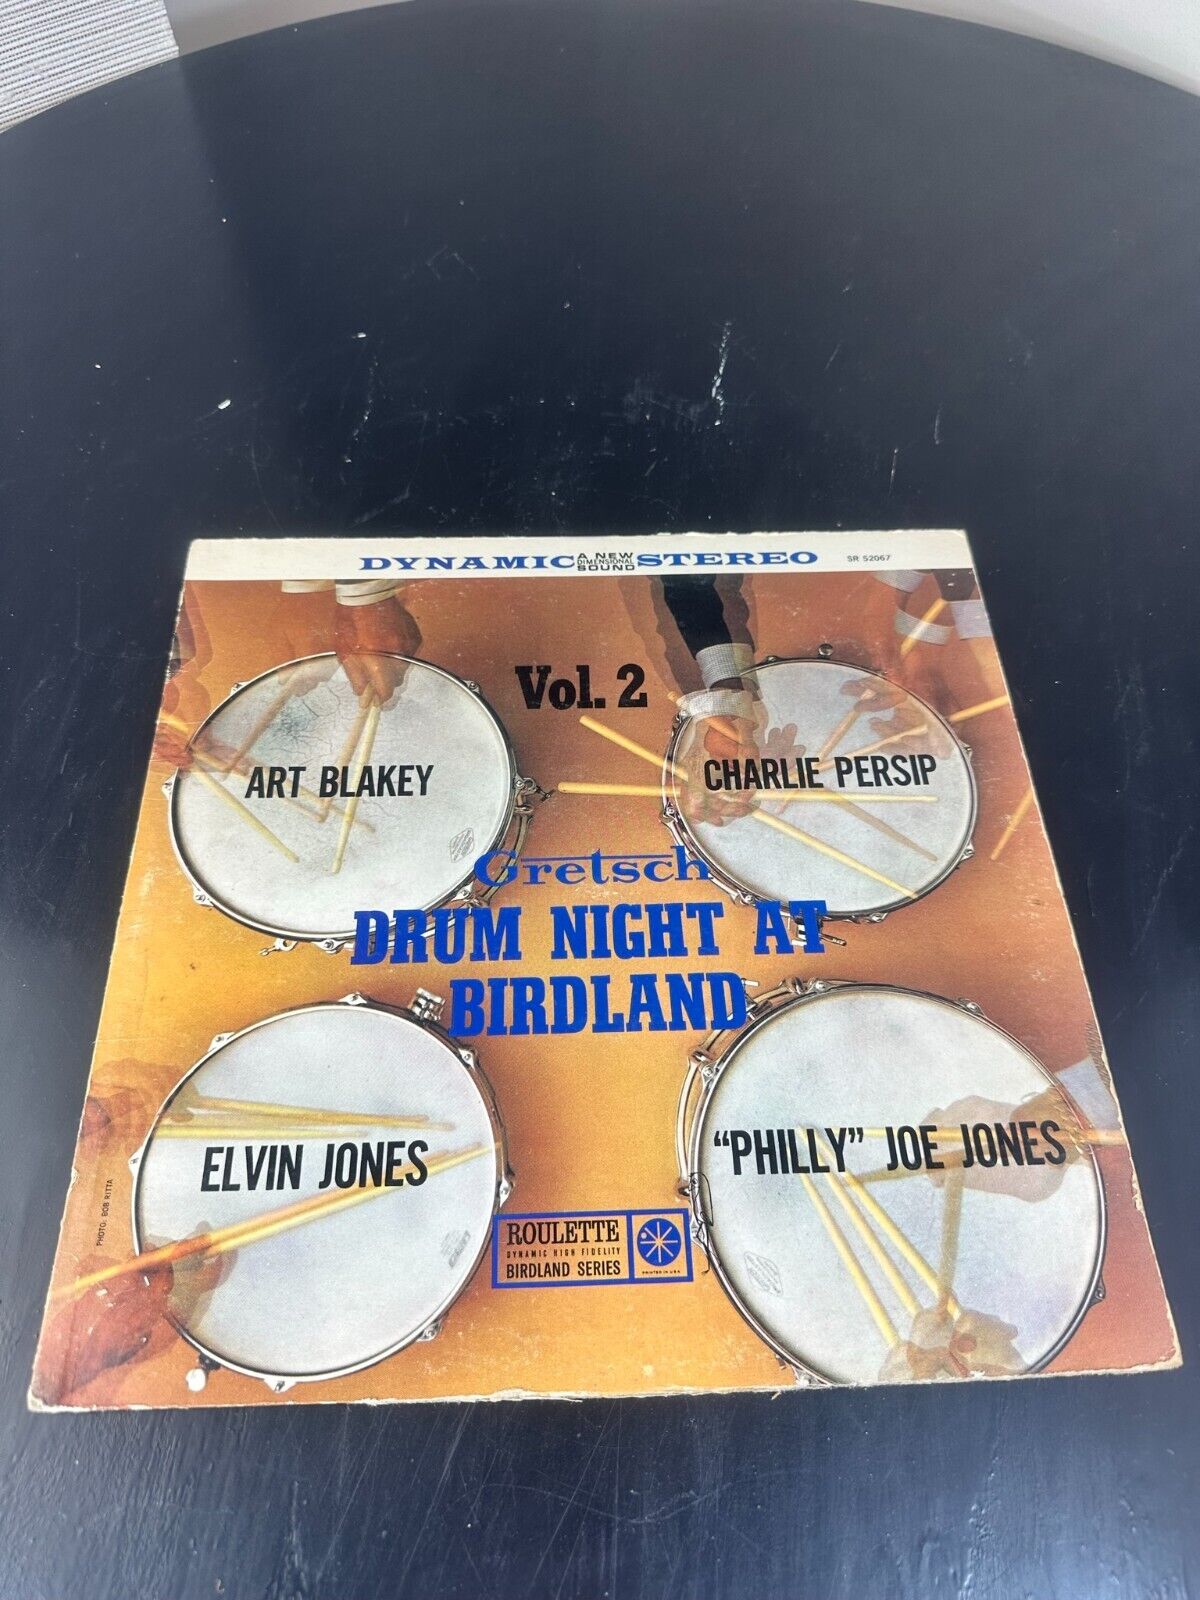 Gretsch Drum Night At Birdland Vol. 2 Elvin Jones Philly Joe Jones